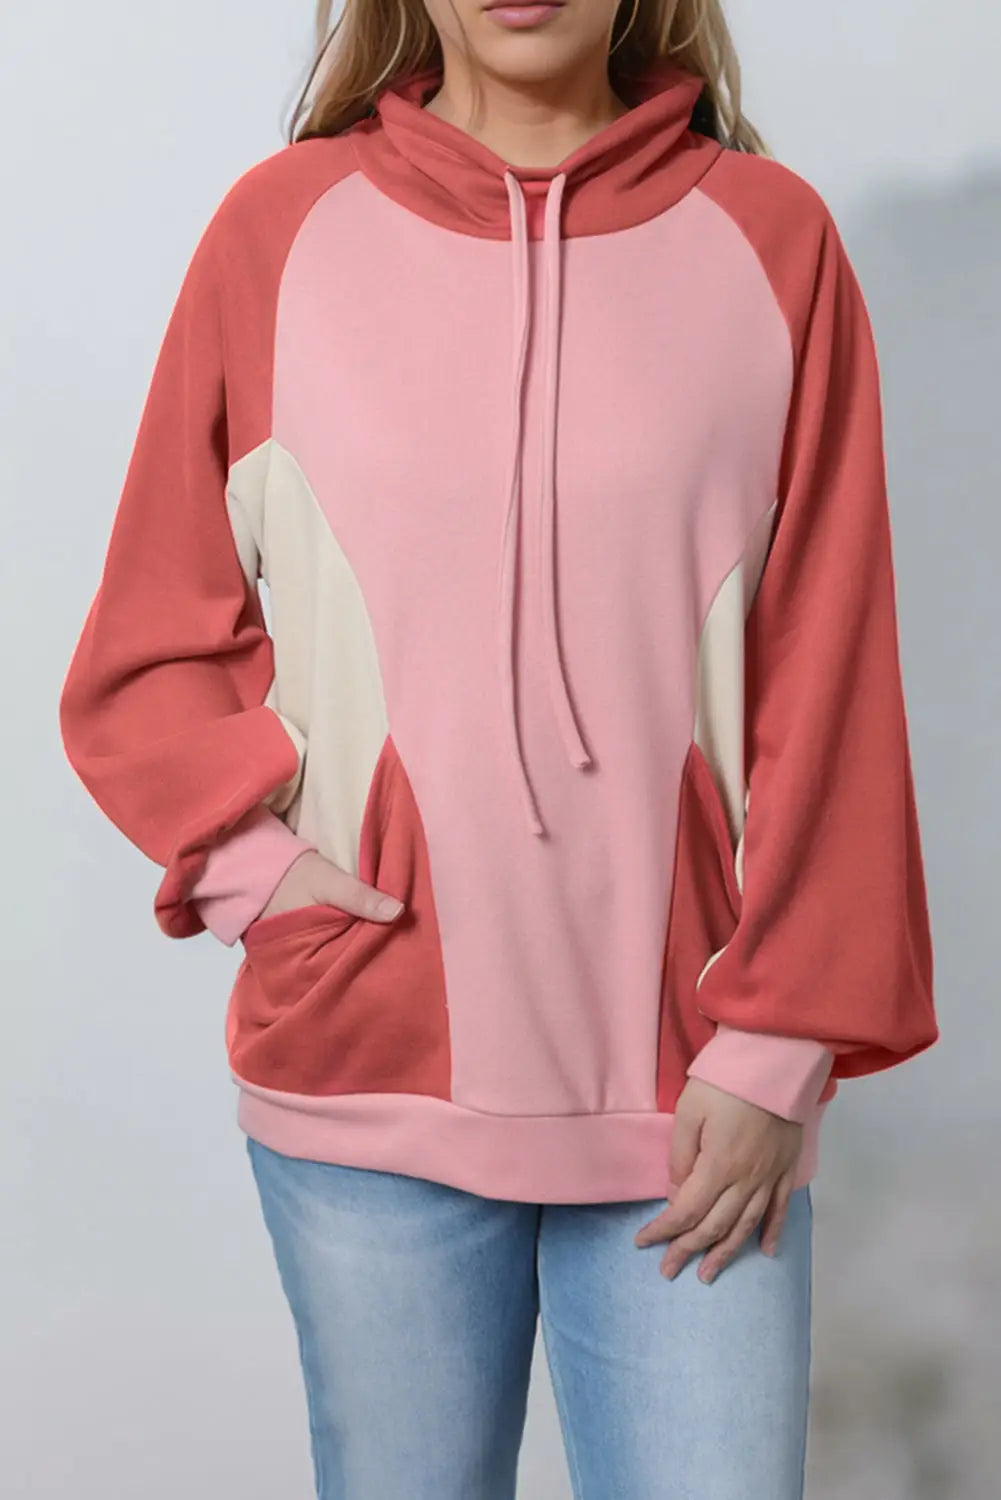 Pink drawstring pullover pocketed colorblock sweatshirt - sweatshirts & hoodies